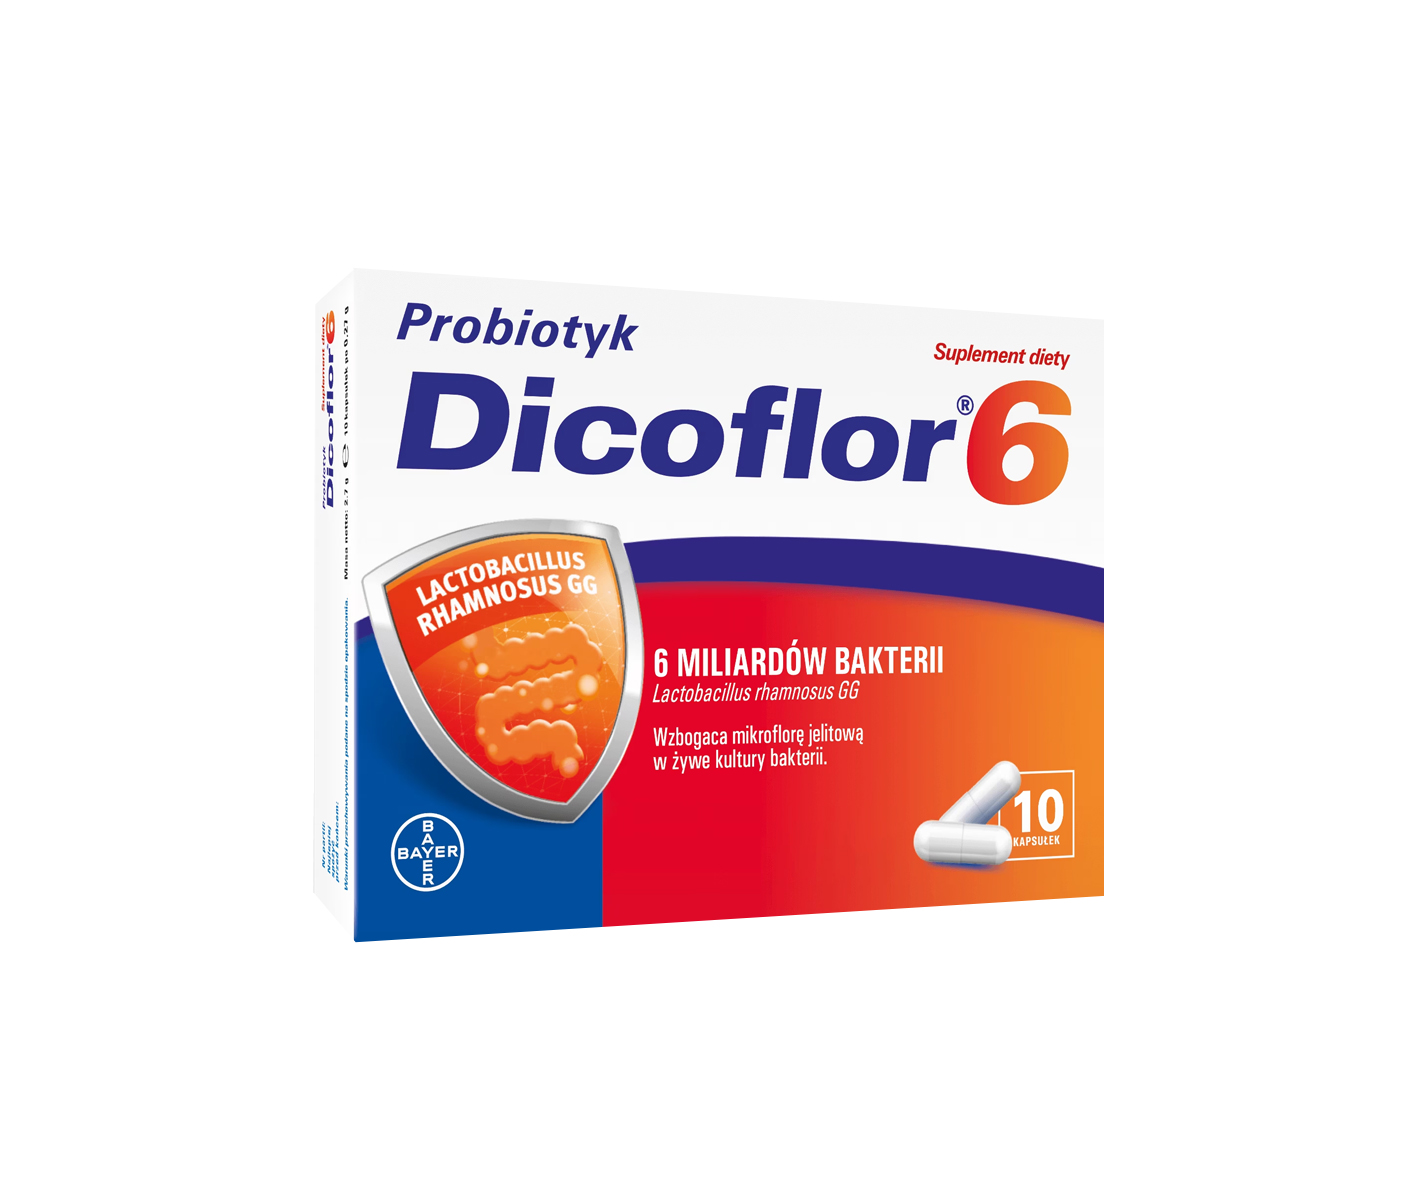 Dicoflor 6, dietary supplement, probiotic